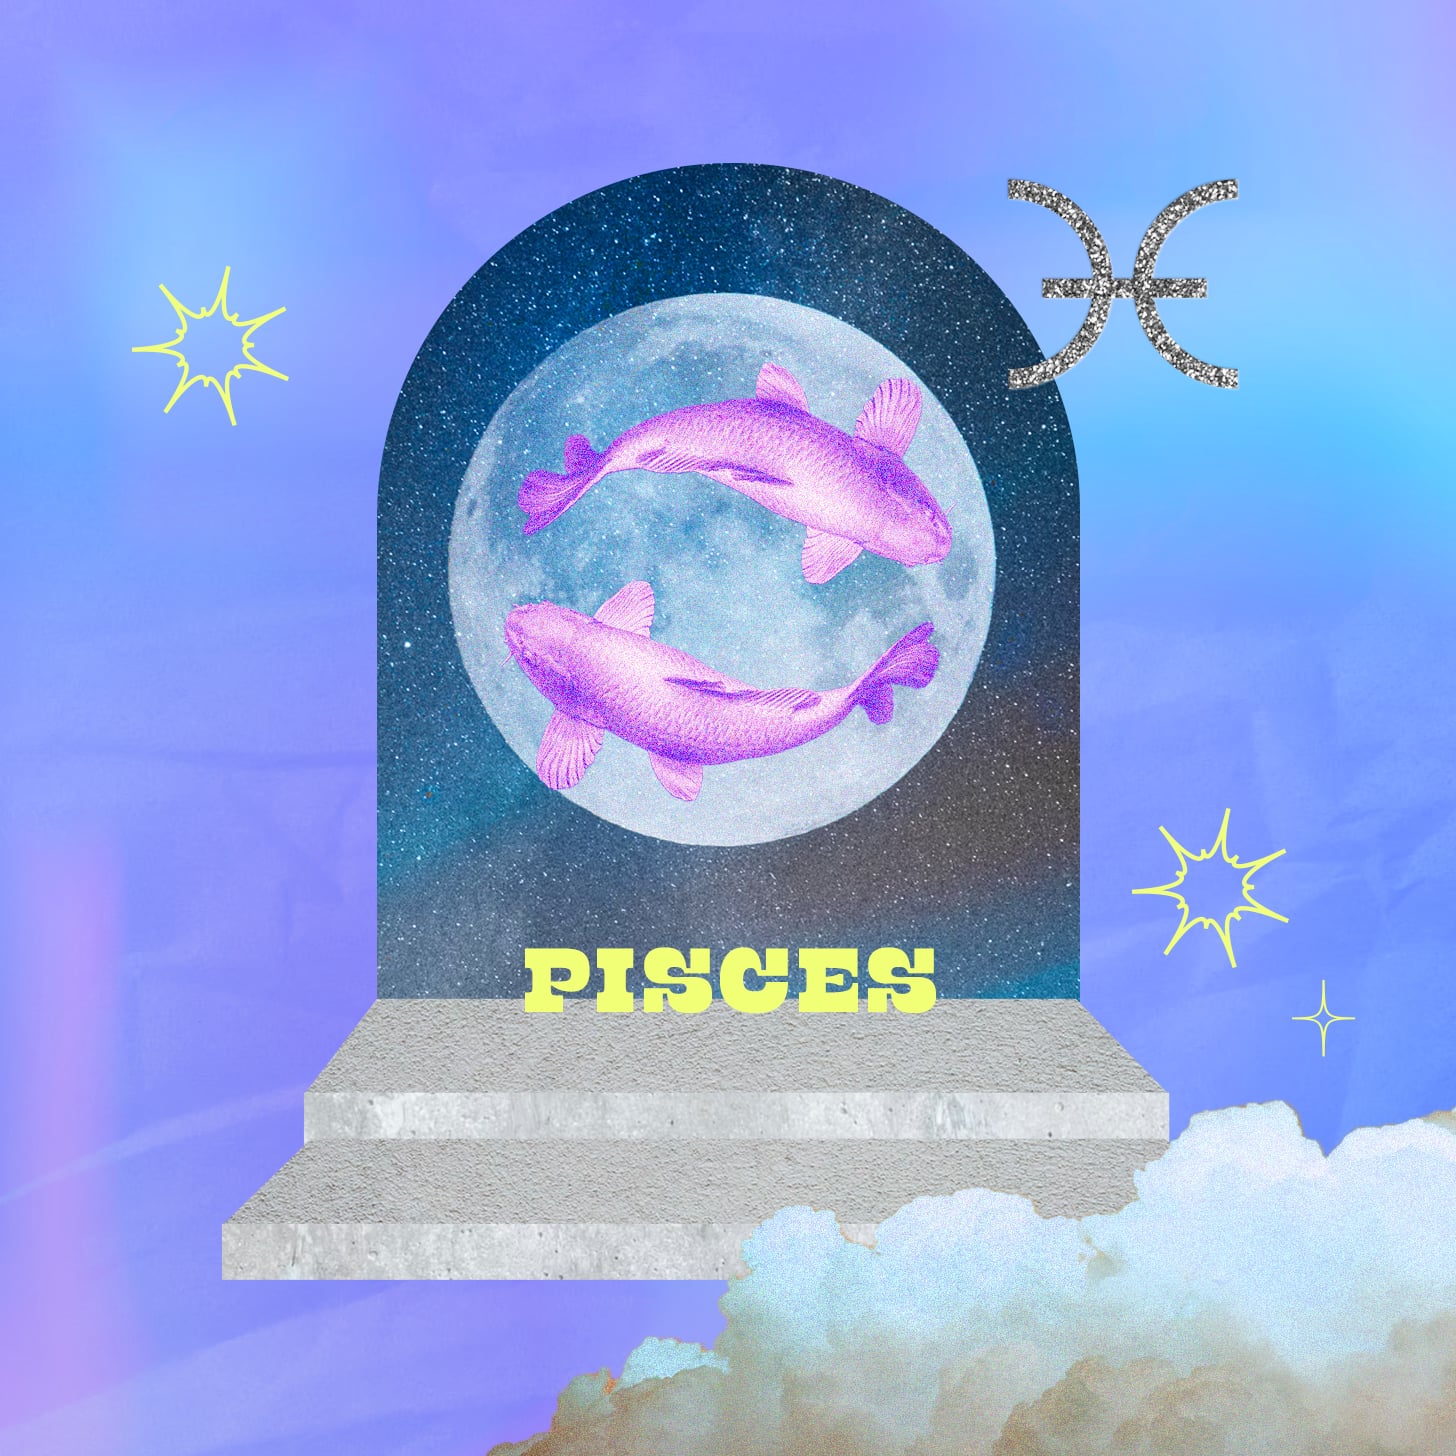 Pisces weekly horoscope for November 13, 2022